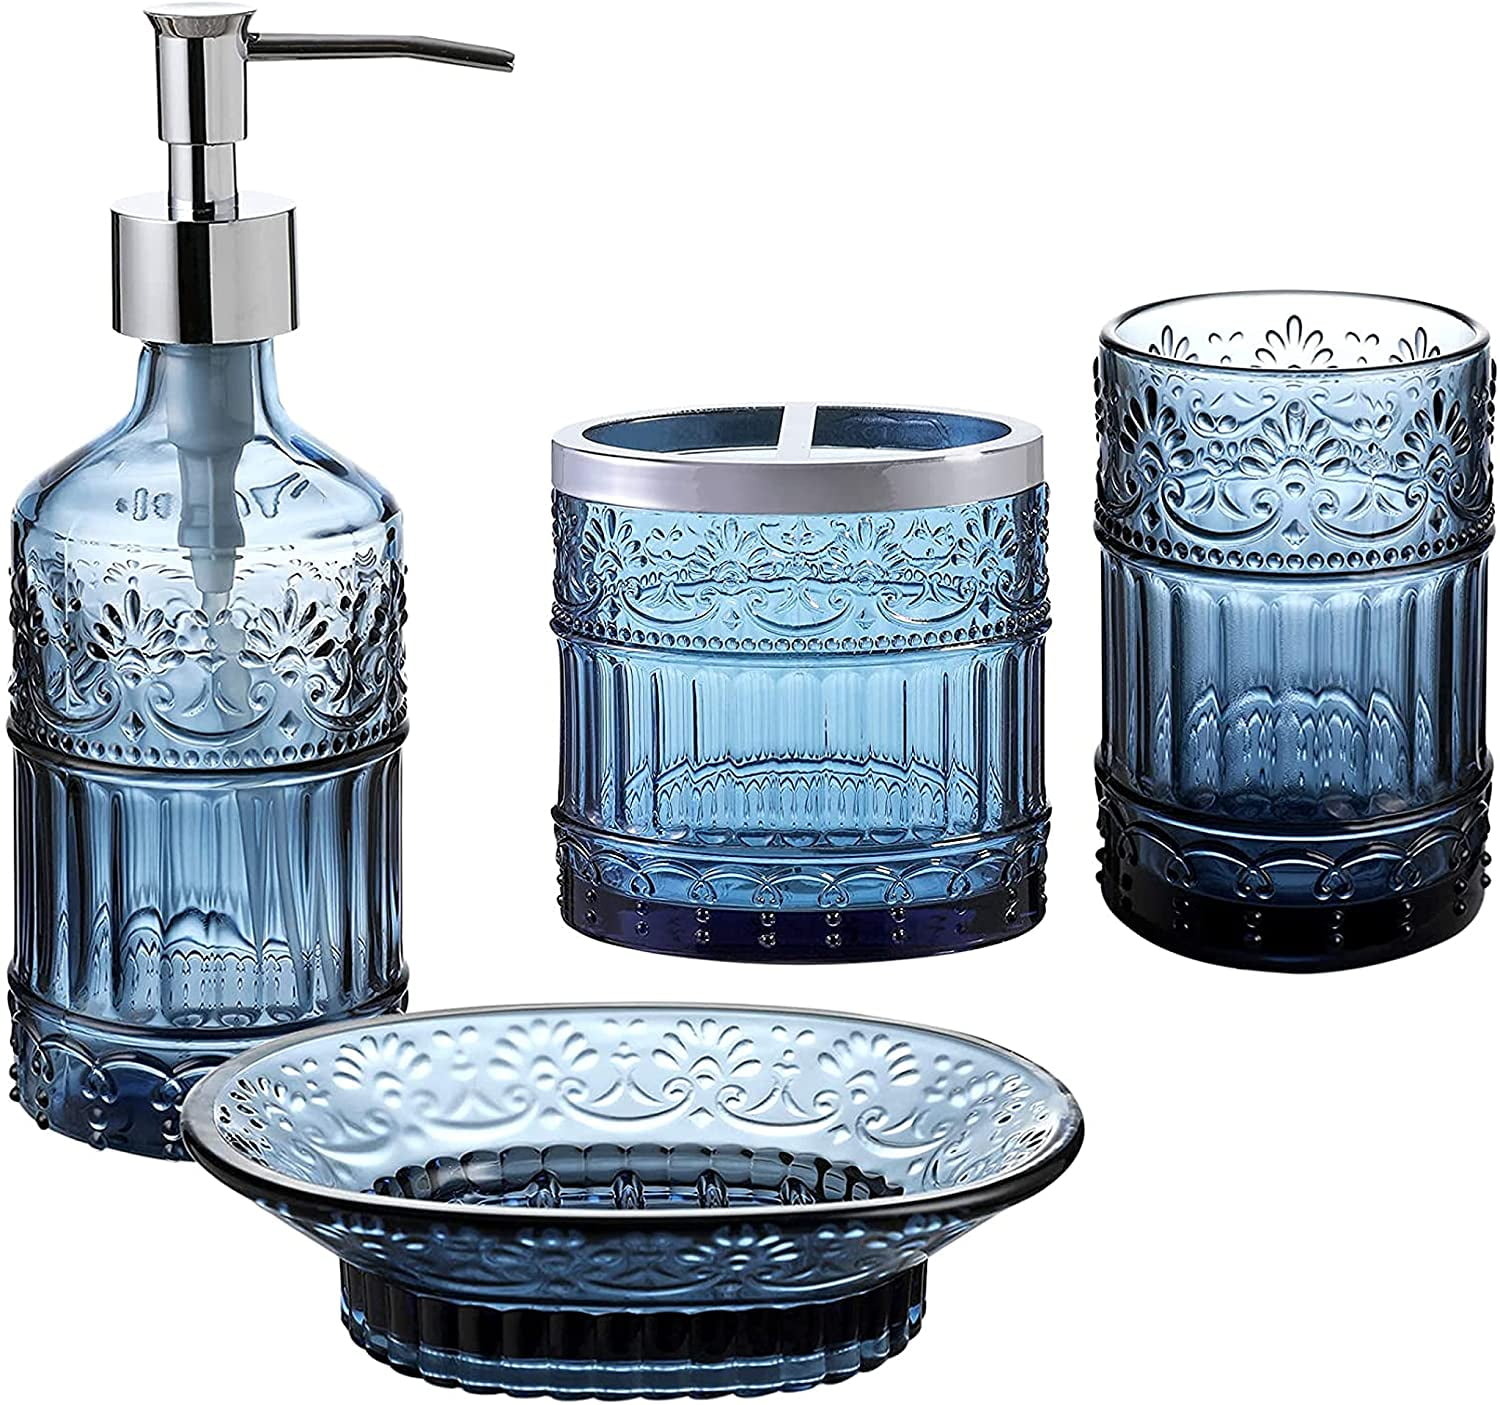 PARADIGM TRENDS LAVENDER BLUE CRACKED GLASS STYLE+SILVER,BATHROOM SOAP DISPENSER 